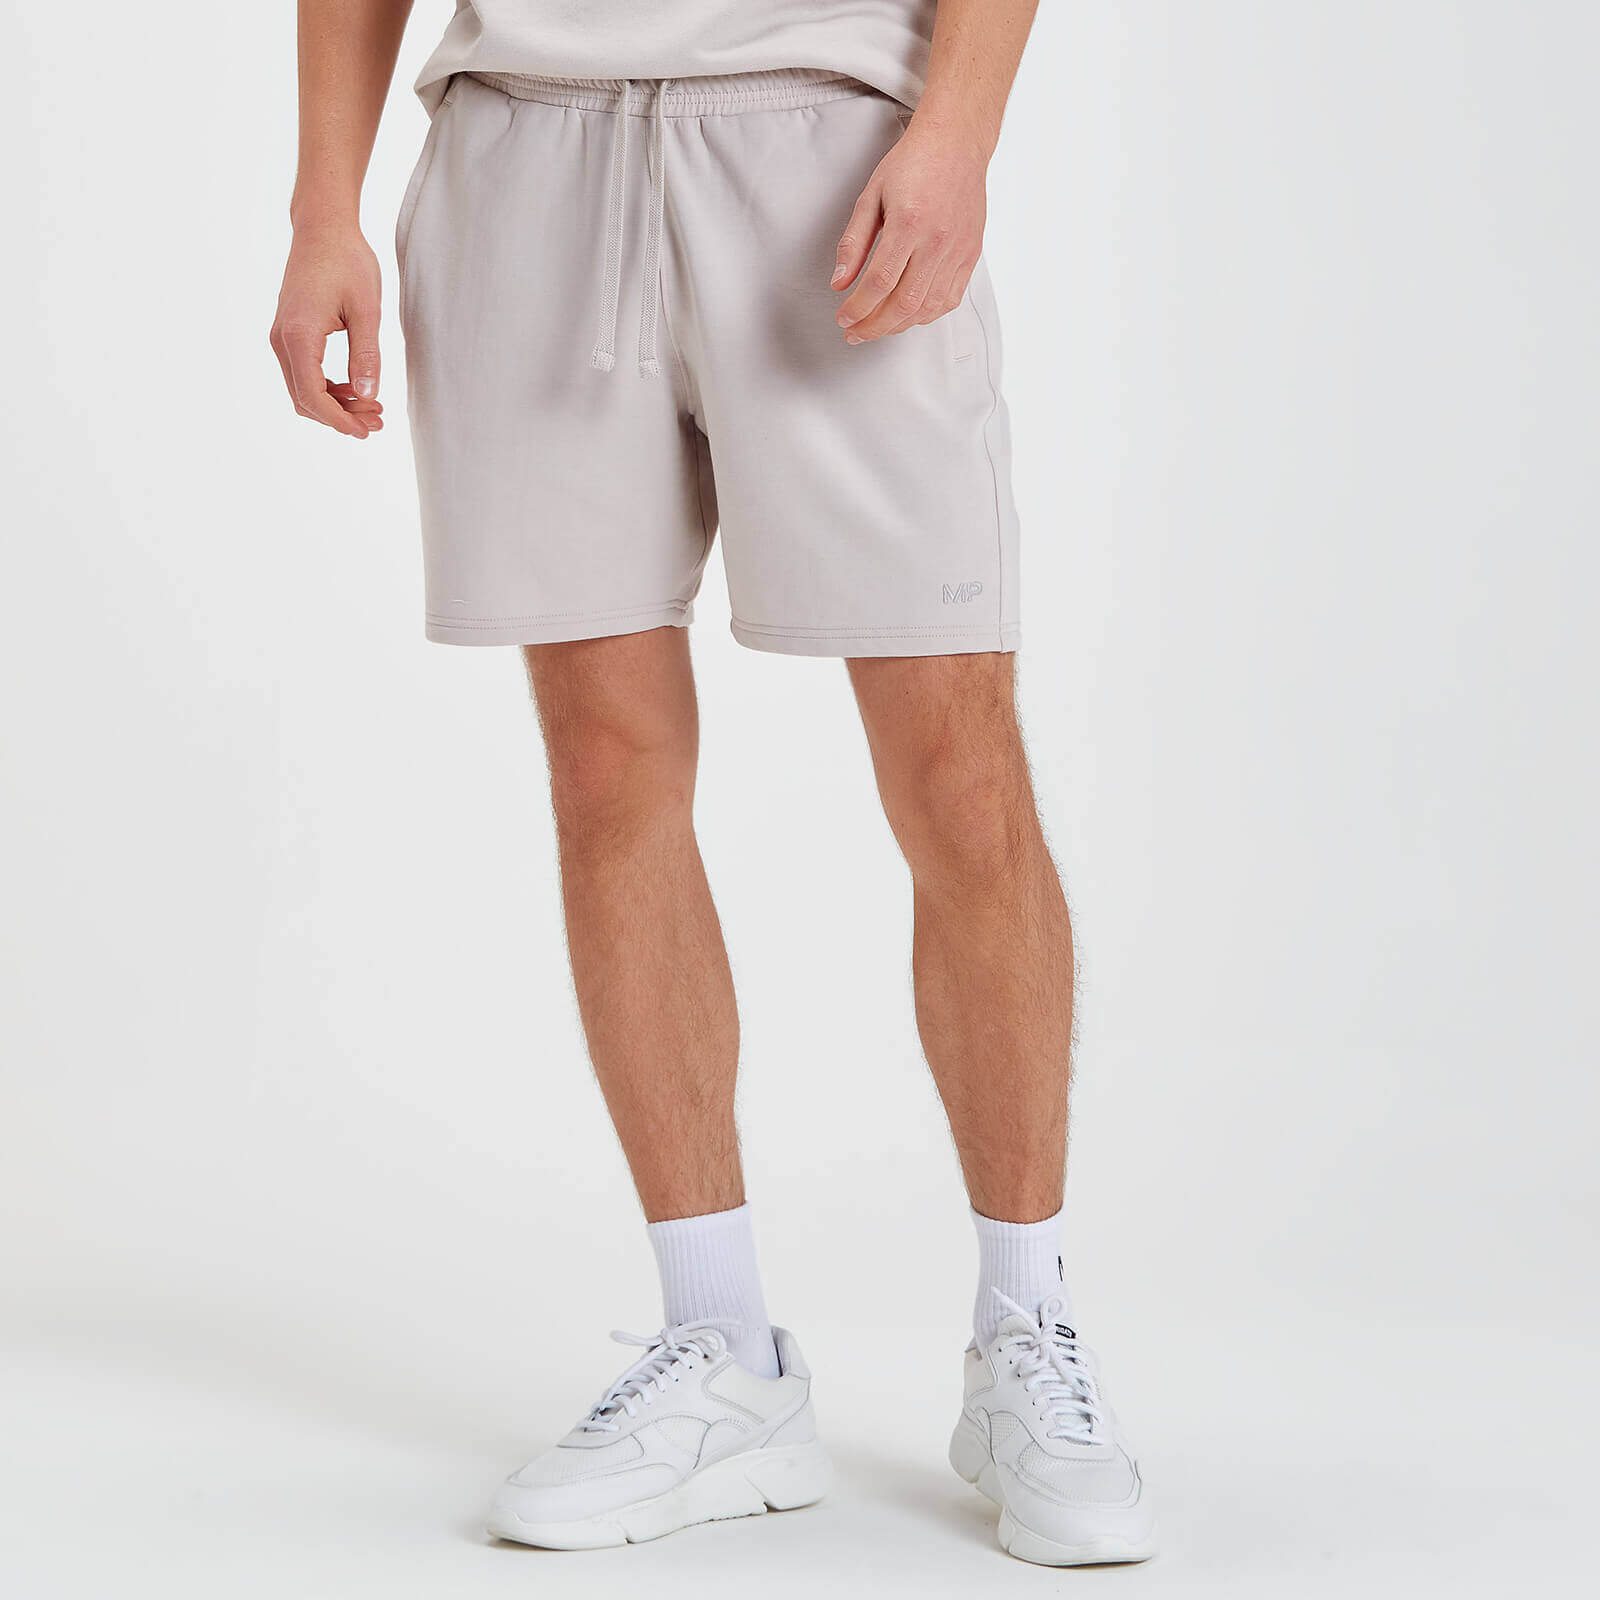 Pantalones cortos transpirables Rest Day para hombre de MP - Gris hueso - XL